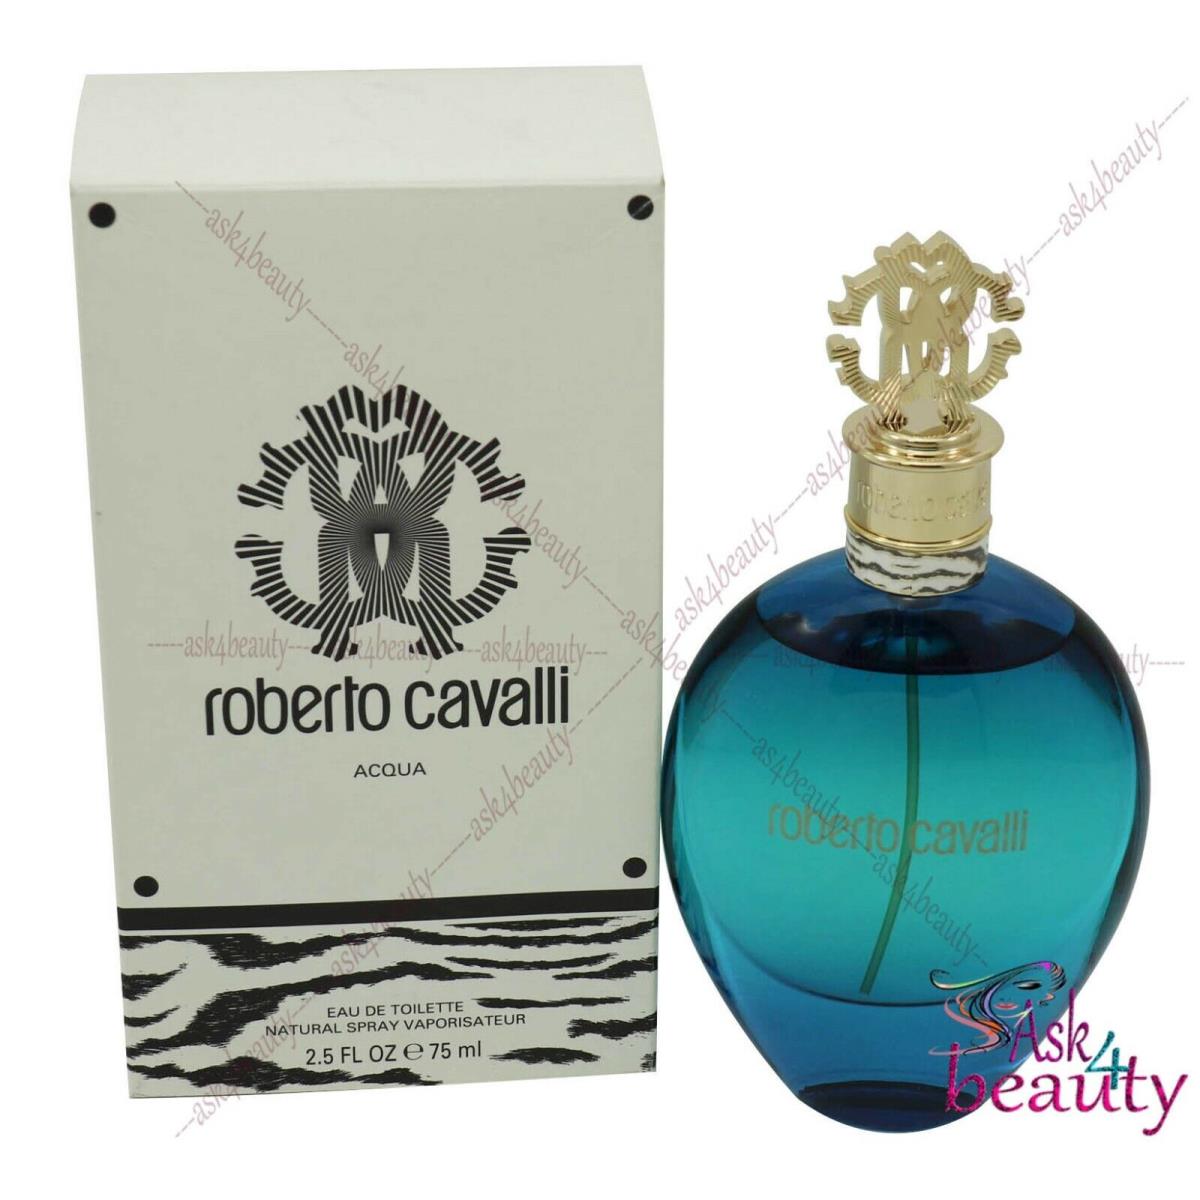 Roberto Cavalli Acqua Tester 2.5oz Edt Spray For Women - Same As a Picture